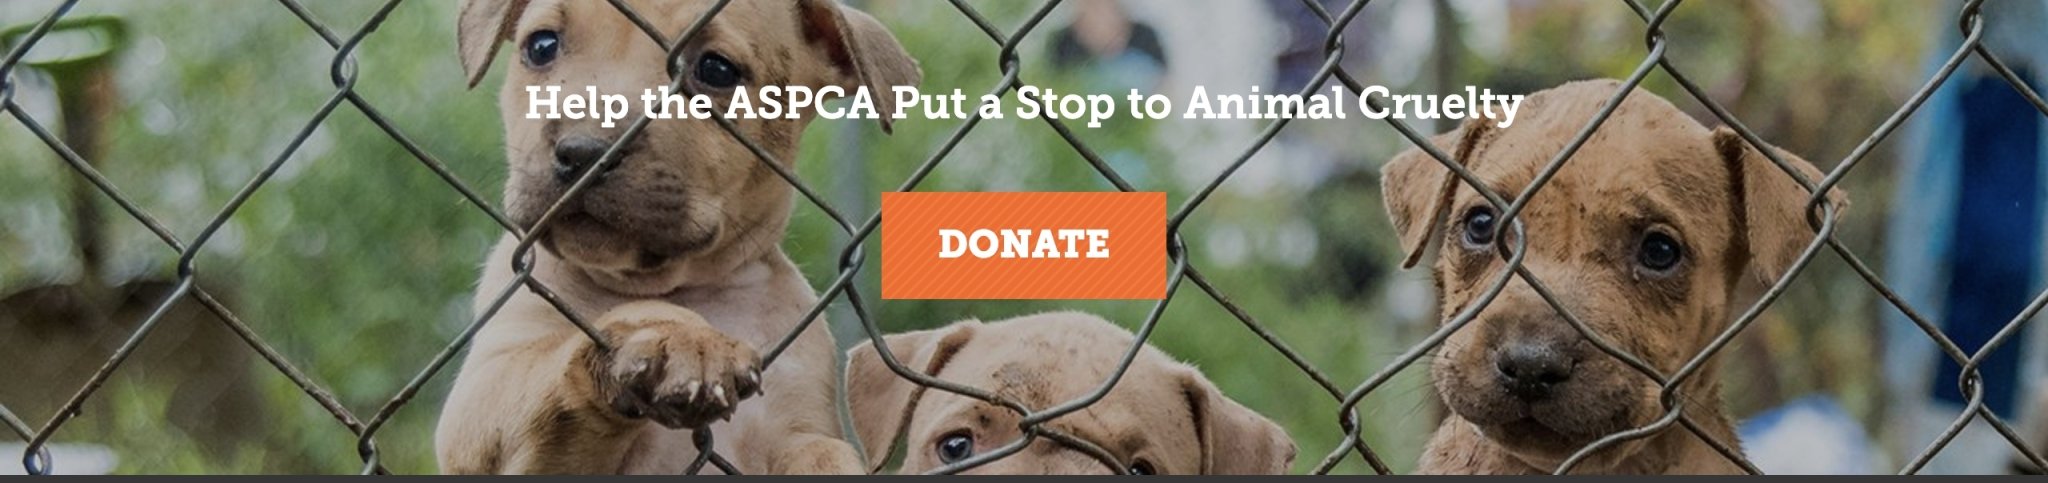 Donate to the ASPCA Foundation - Aashi Beauty